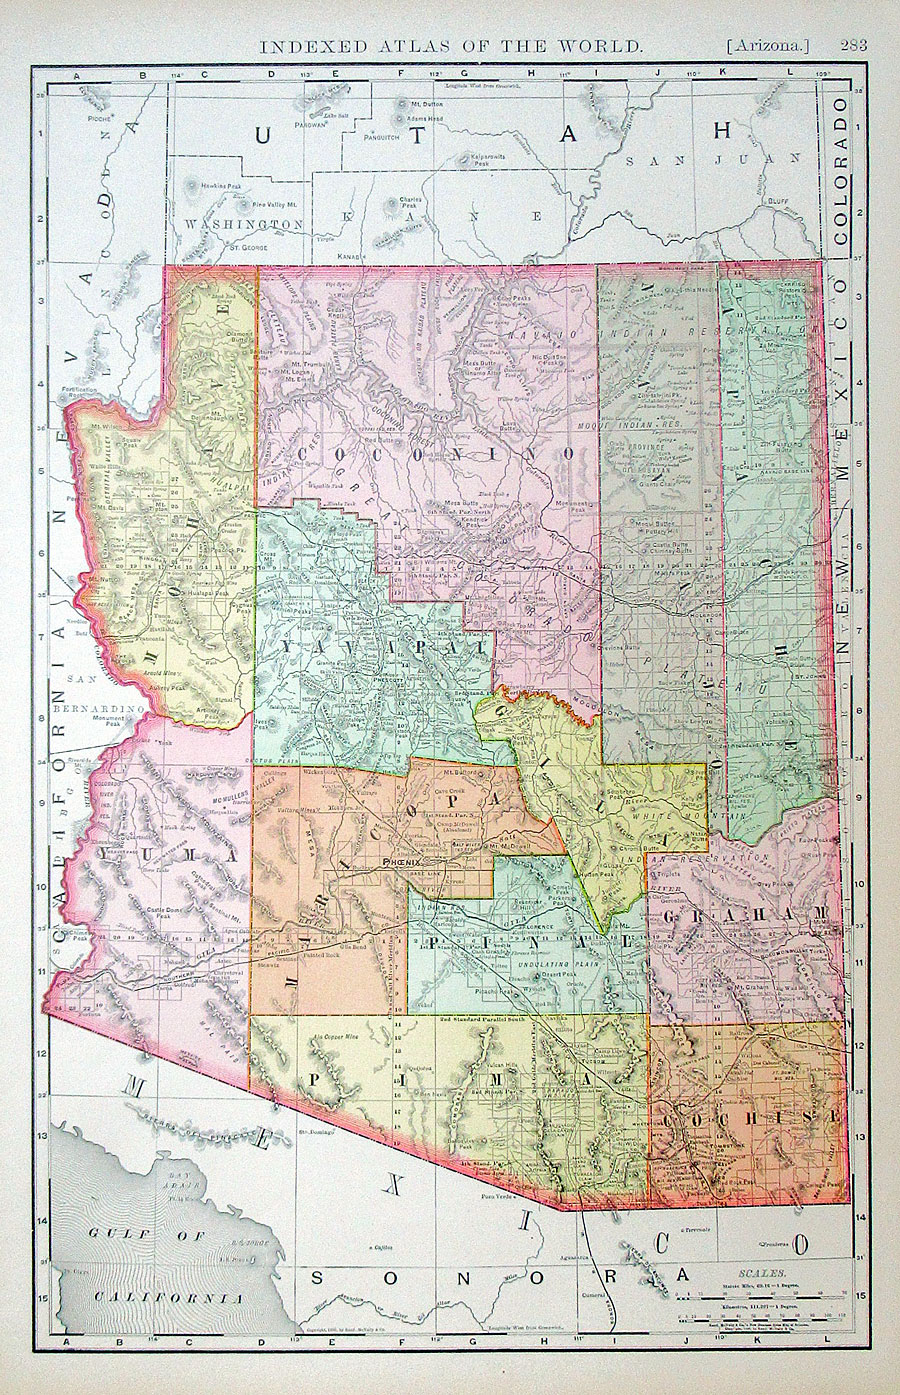 c 1898 Rand, McNally & Co Map of Arizona Territory